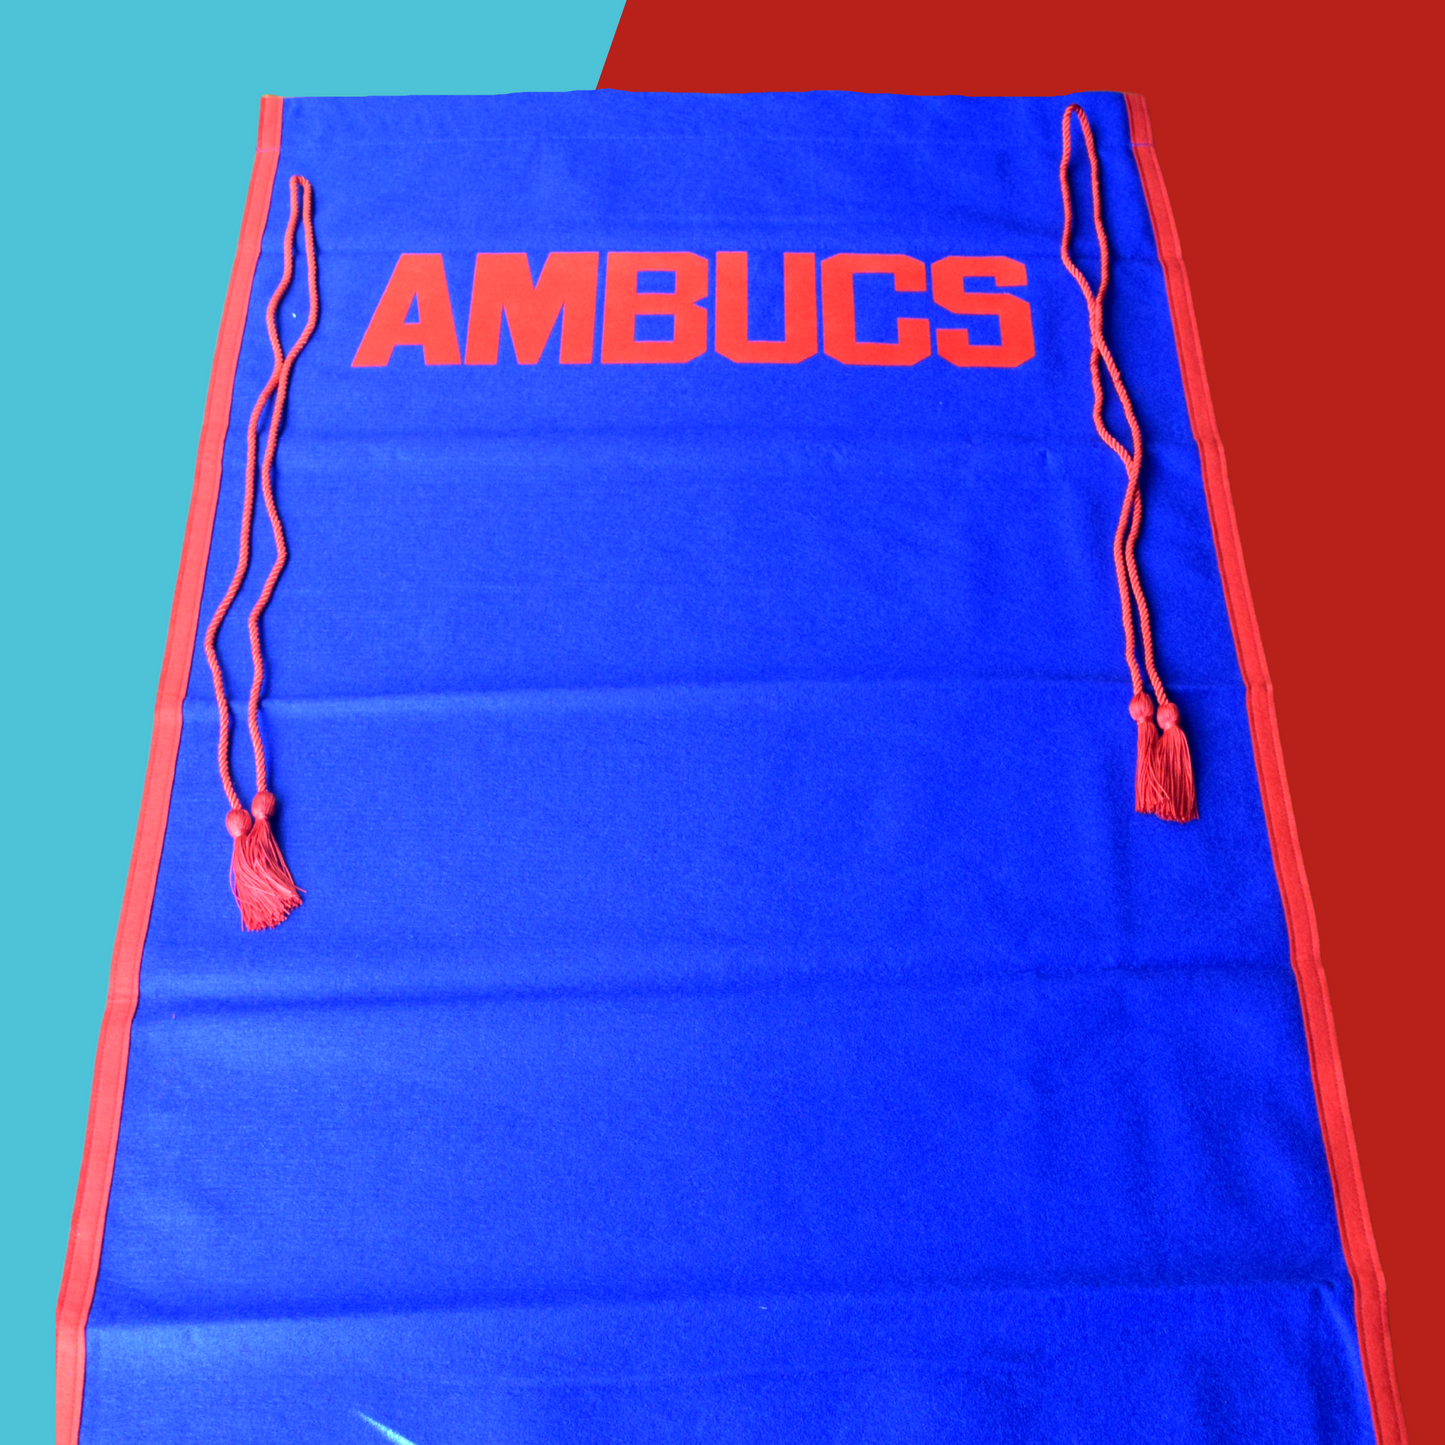 AMBUCS Felt Awards Banner